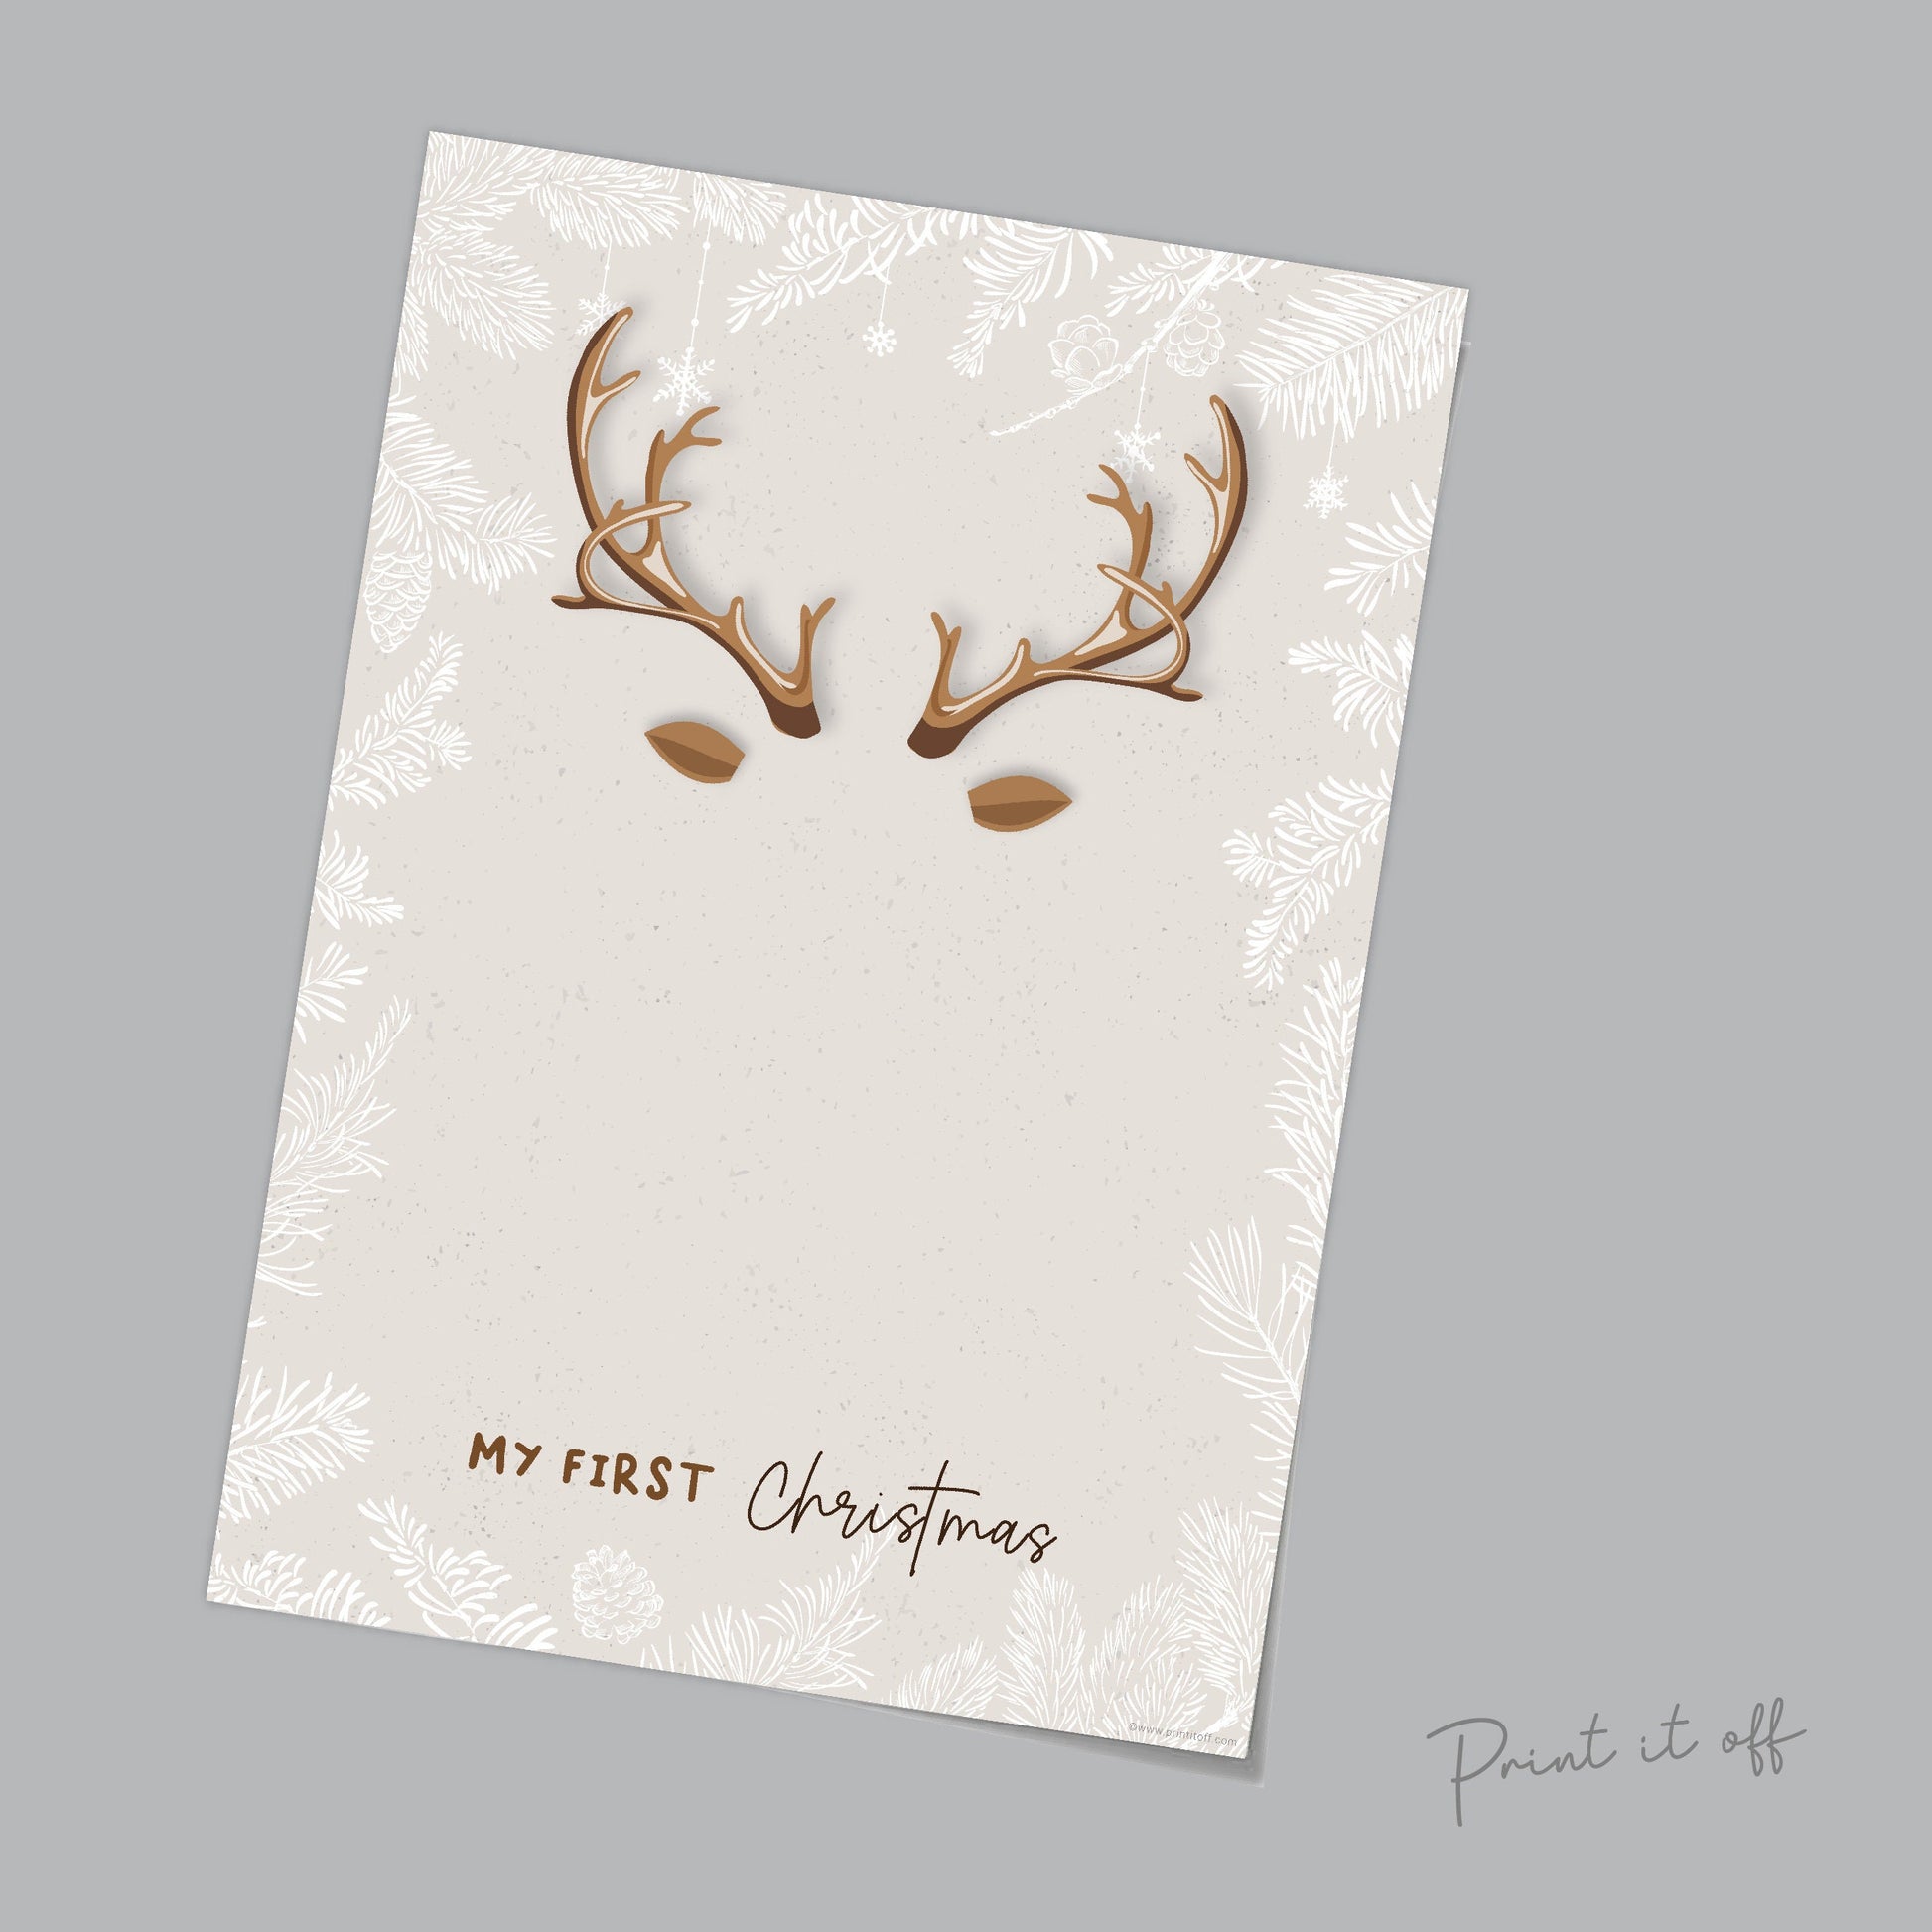 My First Christmas Footprint Reindeer / Xmas Handprint Art Craft / Baby Newborn Toddler Foot / DIY Keepsake Memory Card Print It Off 0637